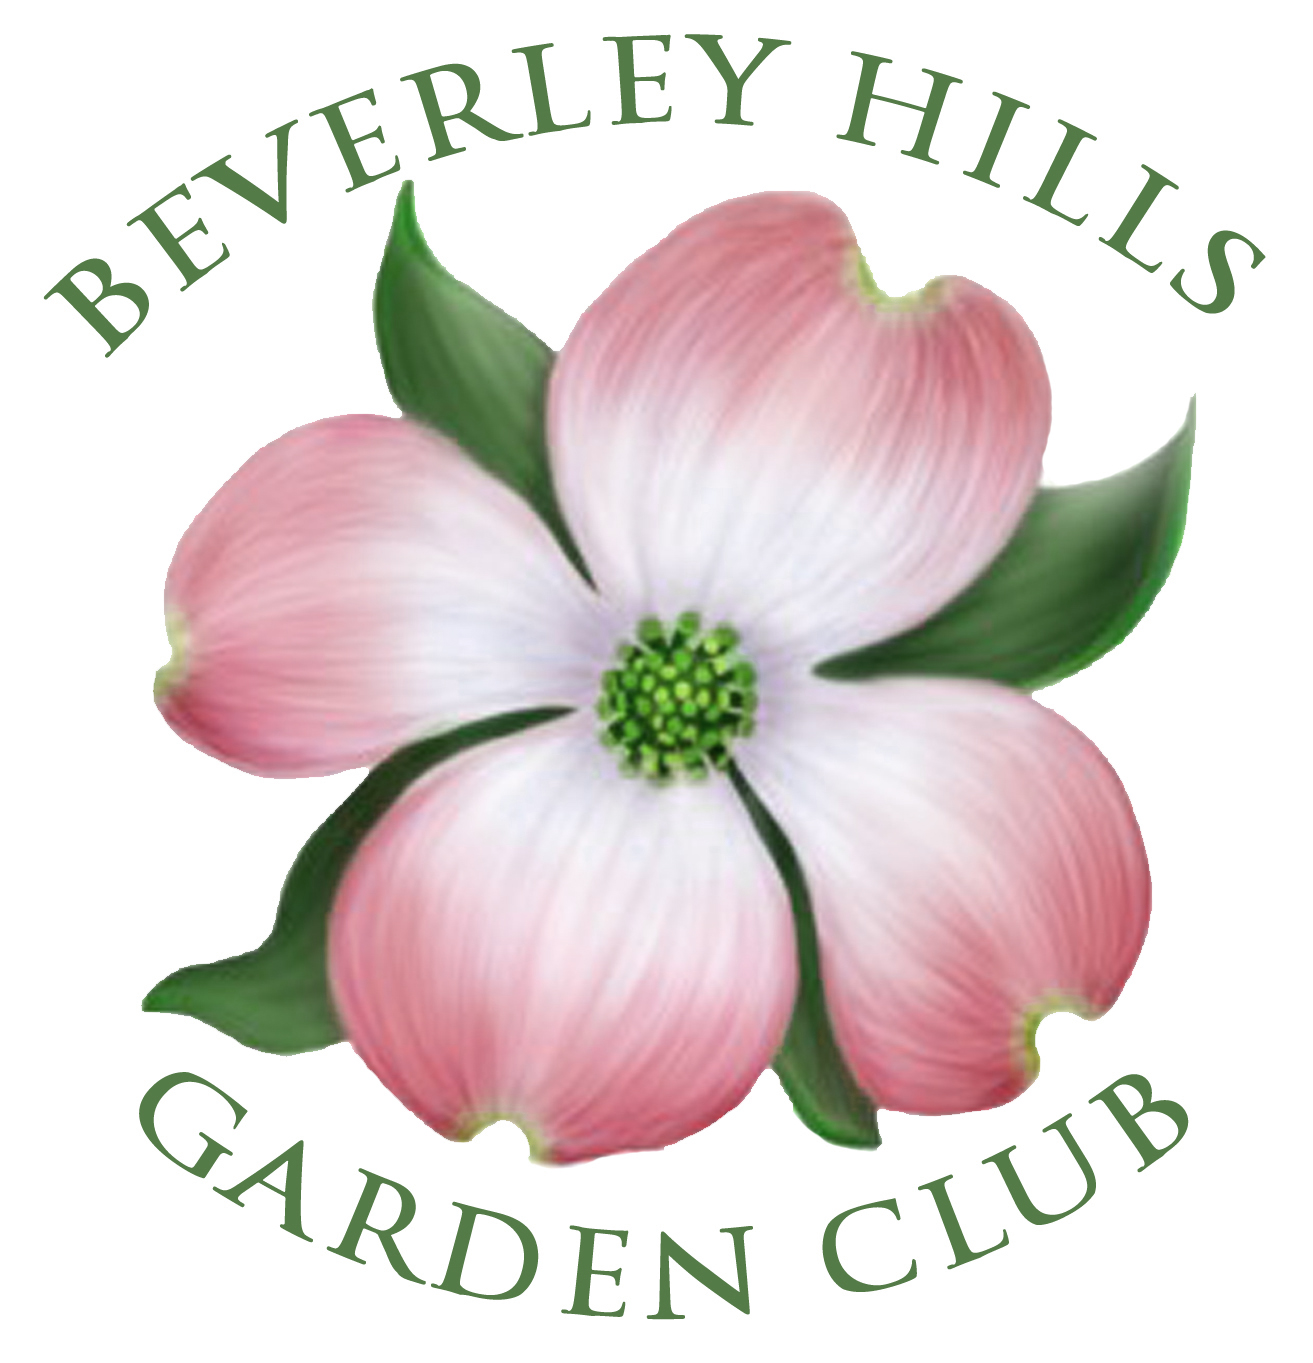 Beverley Hills Garden Club